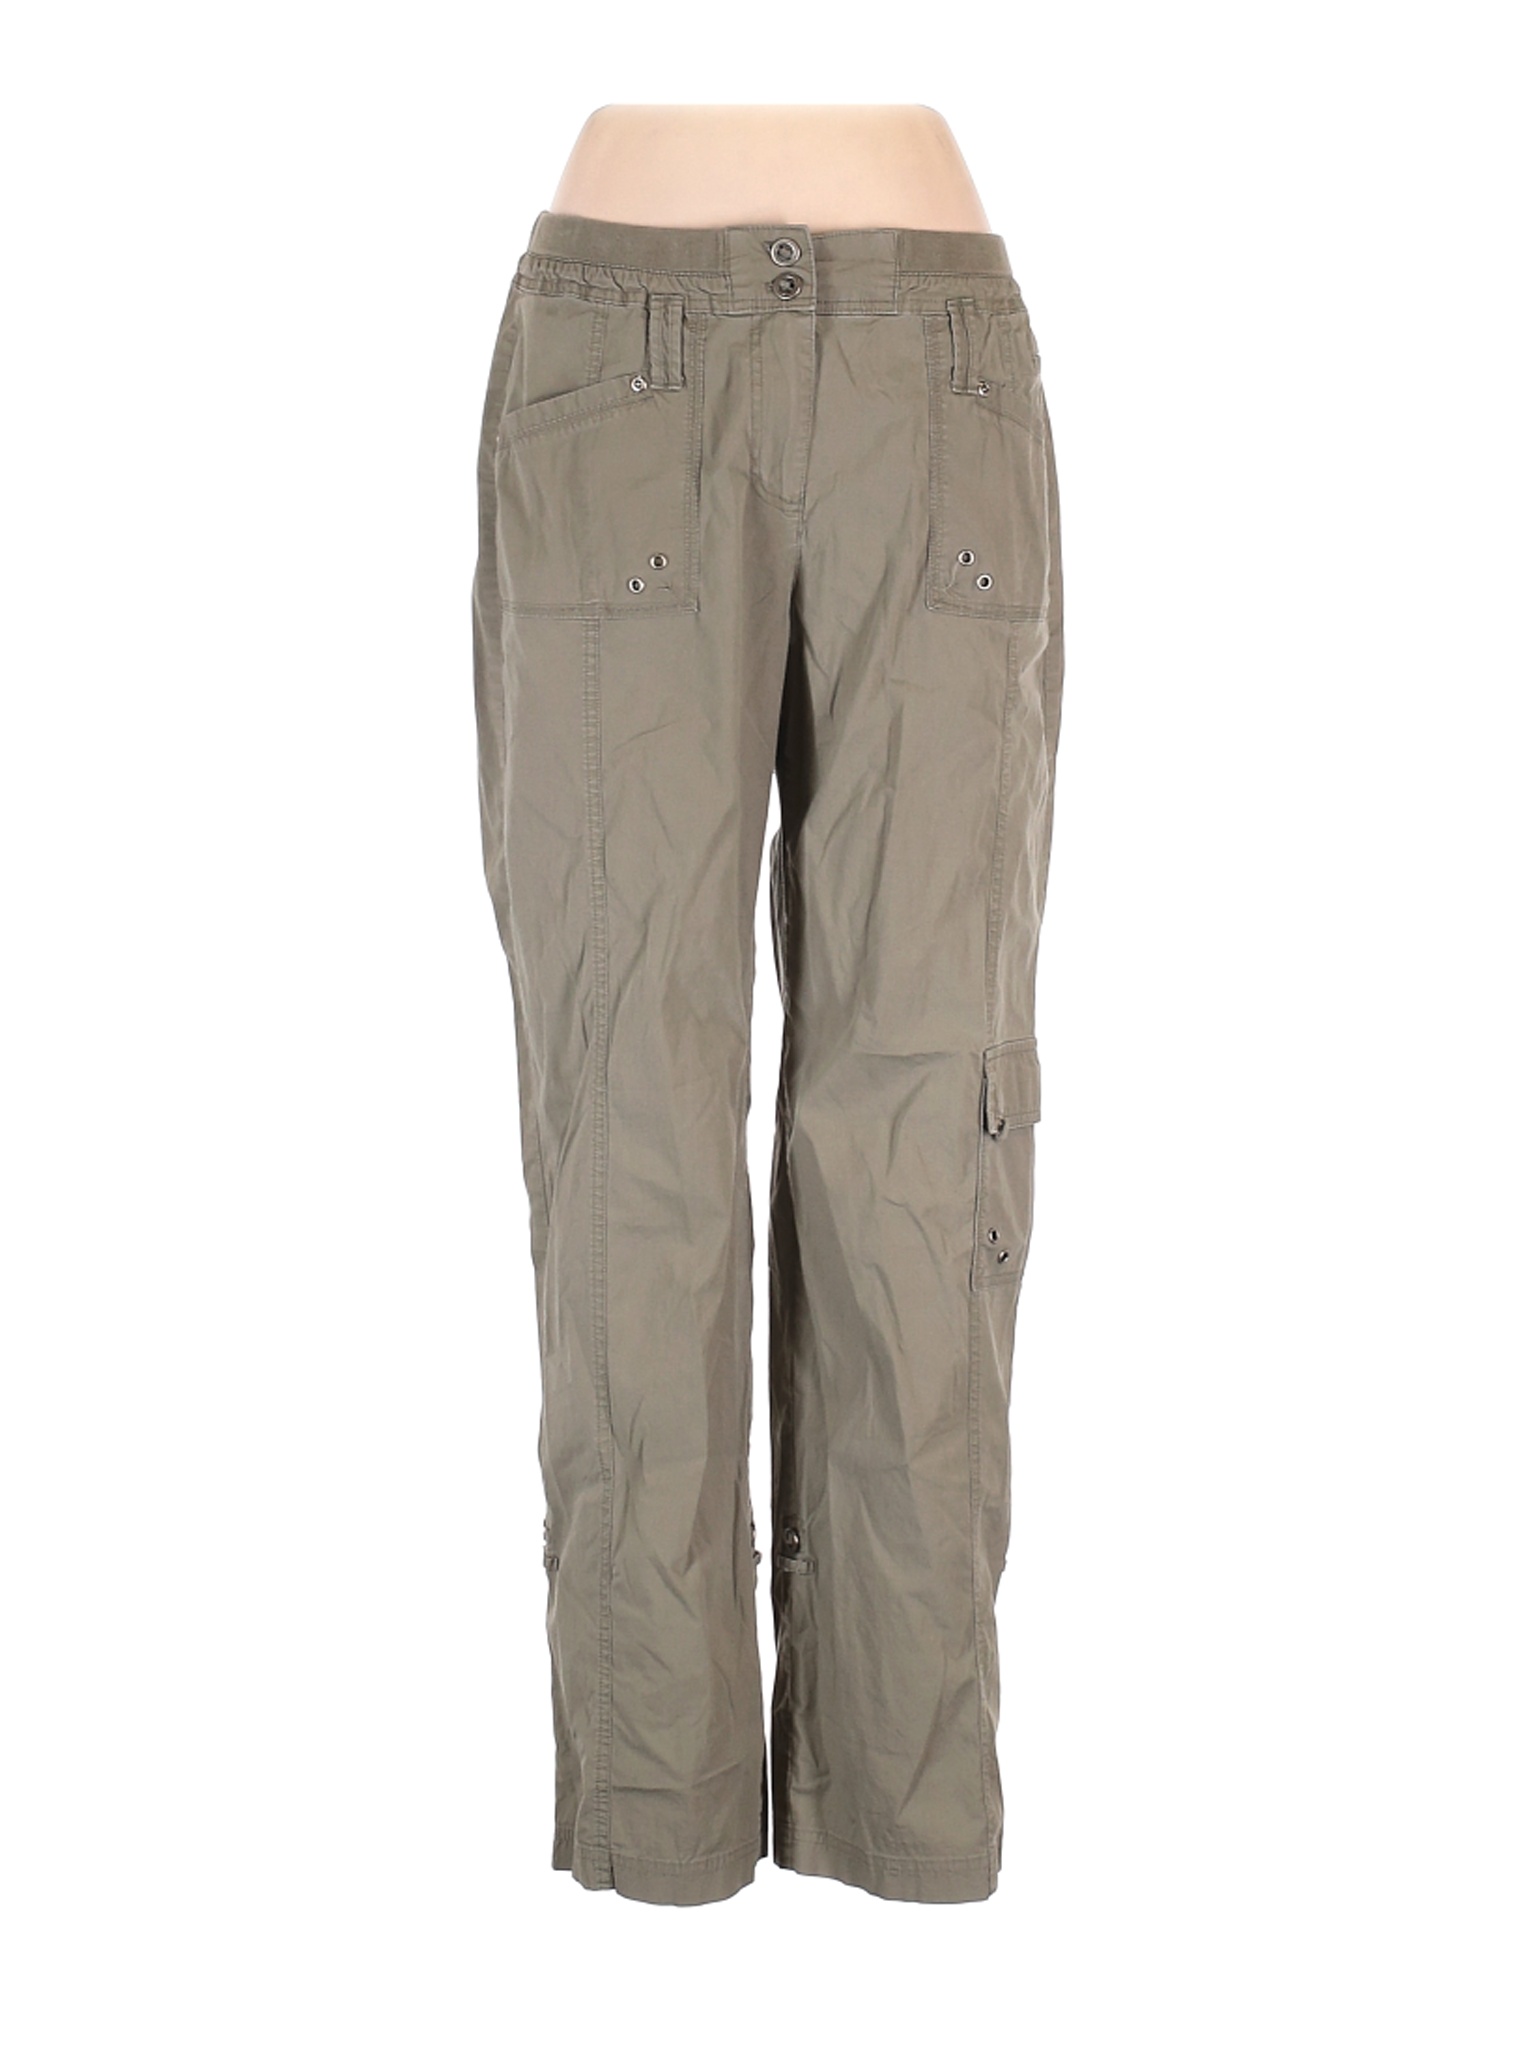 Chico's Women Green Cargo Pants L | eBay